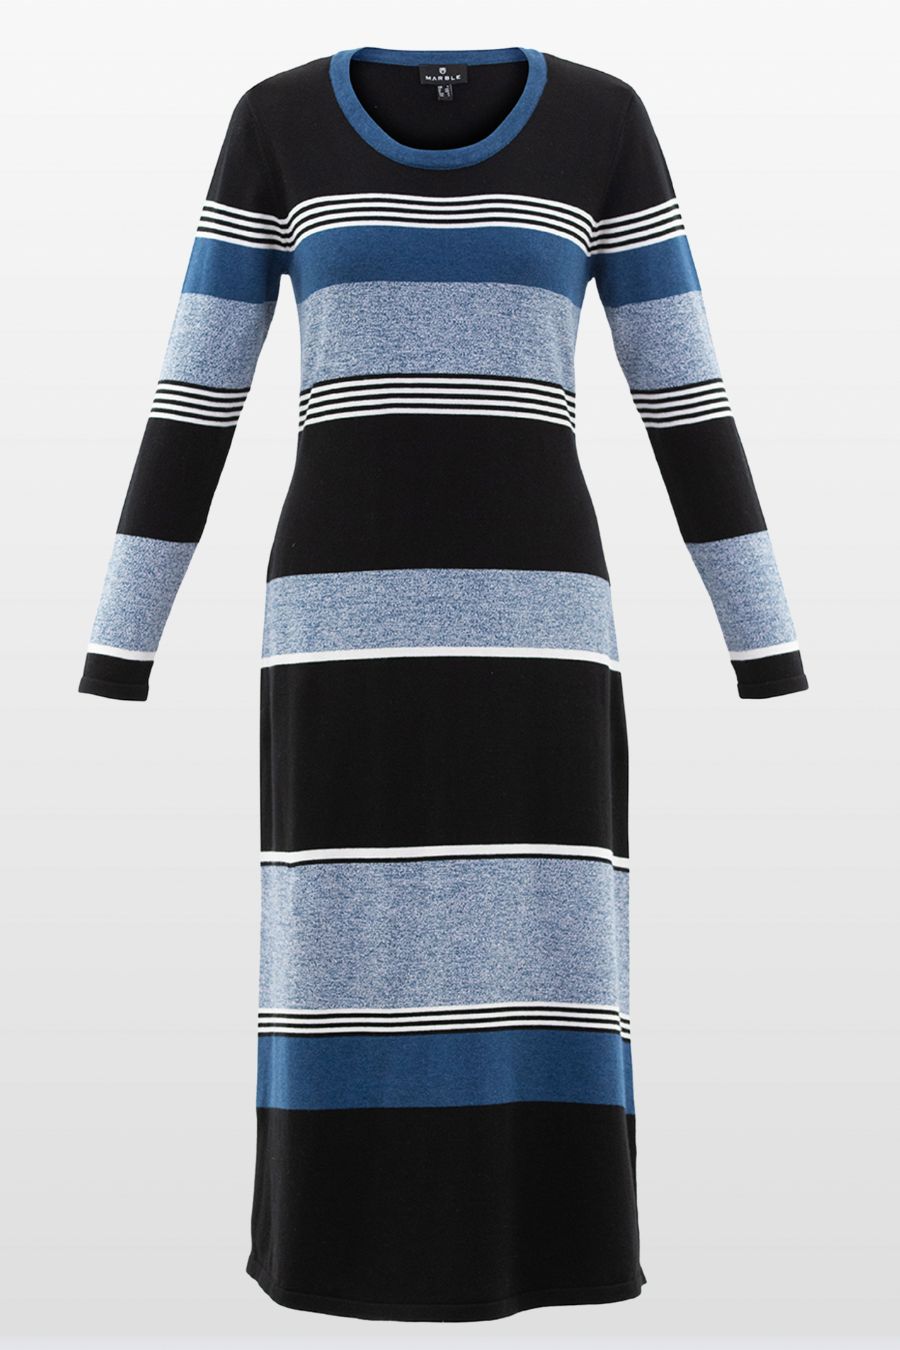 Multi Stripe Cotton Knit Dress ONLINE ONLY